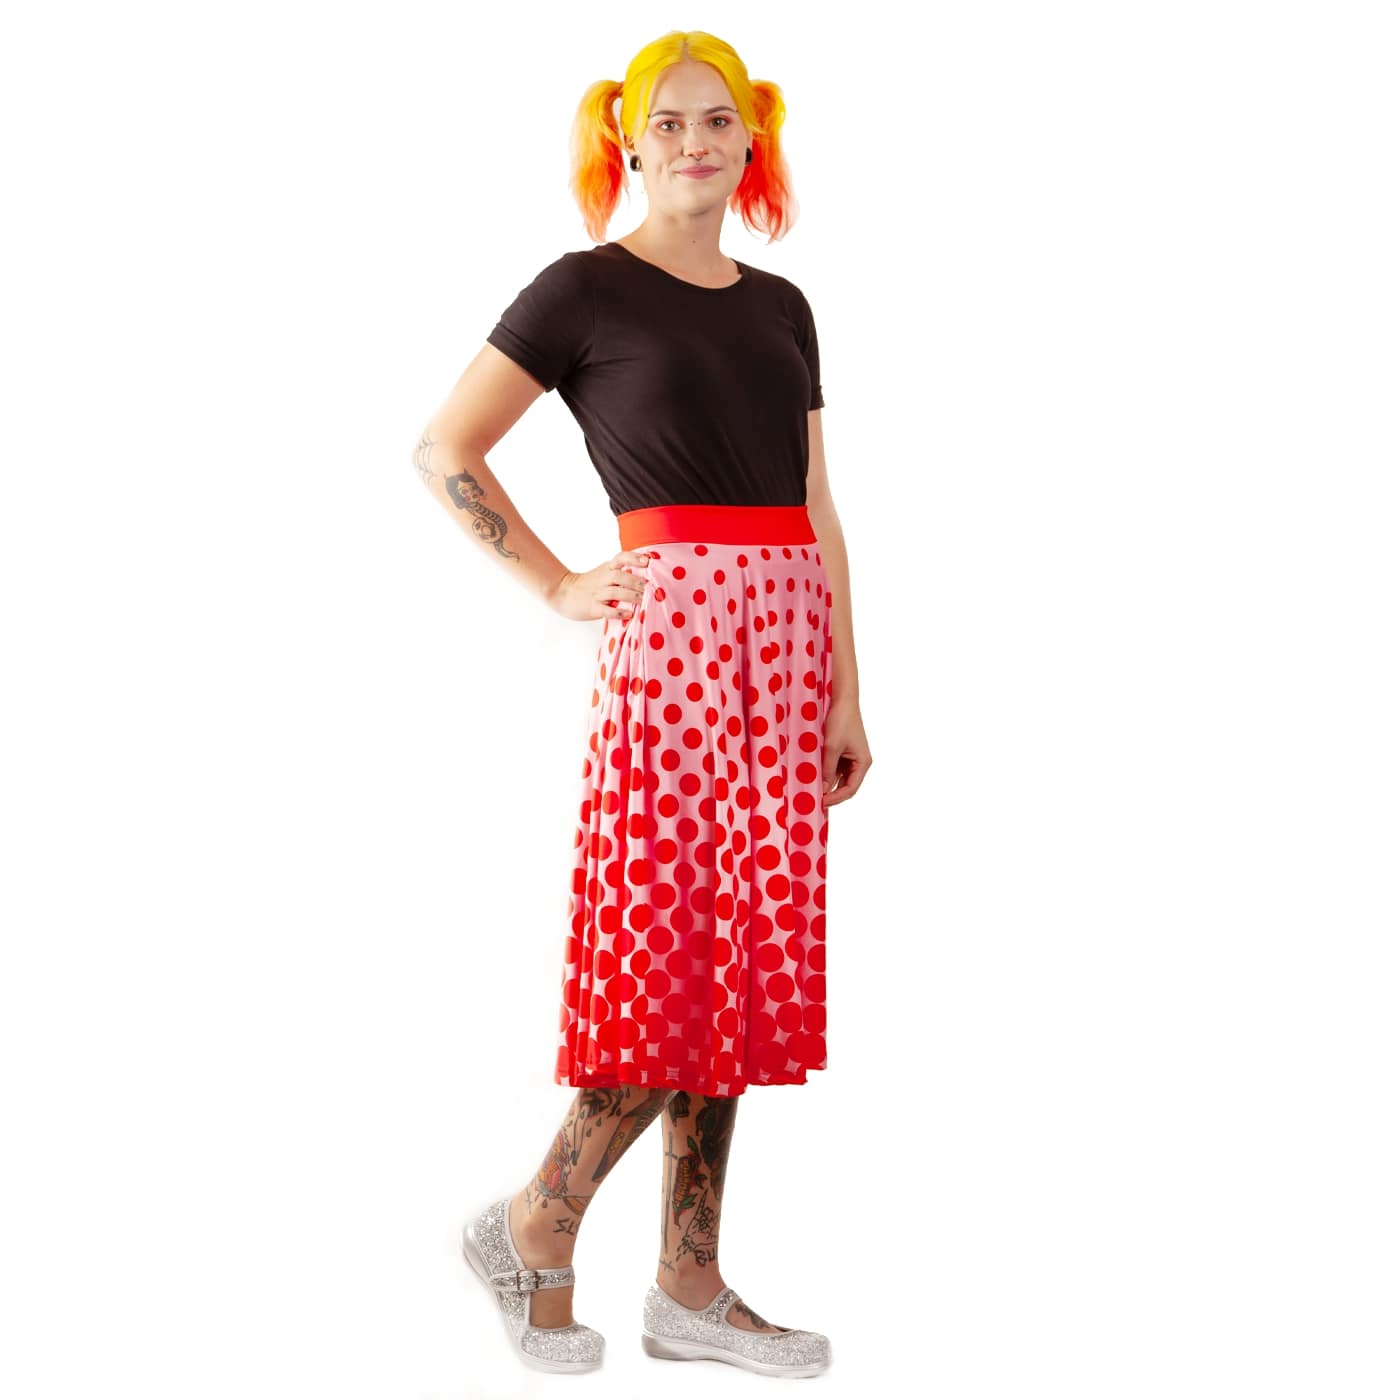 Blush Swishy Skirt by RainbowsAndFairies.com.au (Pink & Red - Polka Dot - Spots - Kitsch - Circle Skirt With Pockets - Mod Retro) - SKU: CL_SWISH_BLUSH_ORG - Pic-06